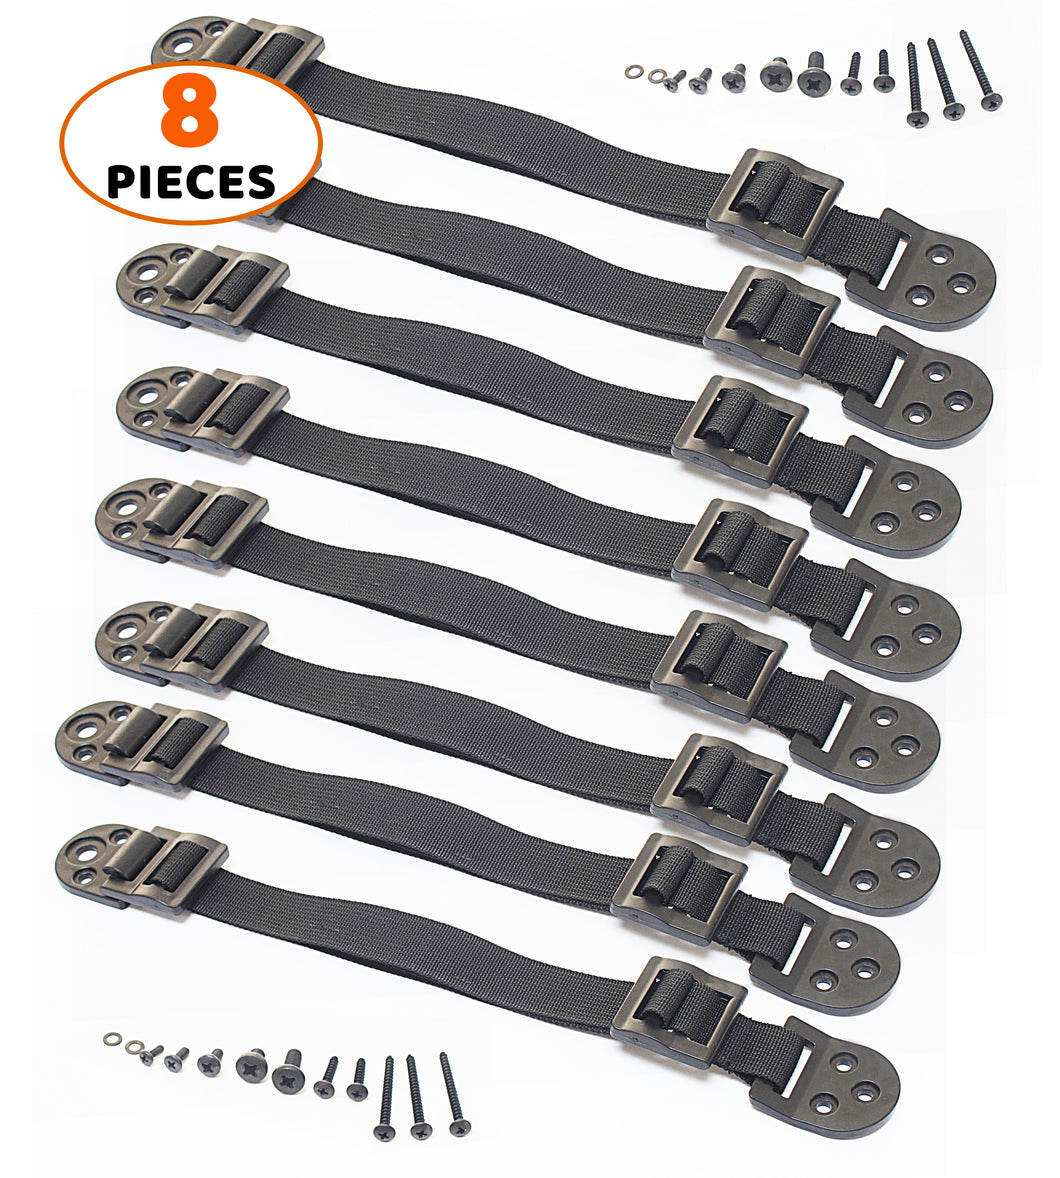 8 PCS Adjustable Anti-Tip Furniture Anchor Safety Straps (Black)